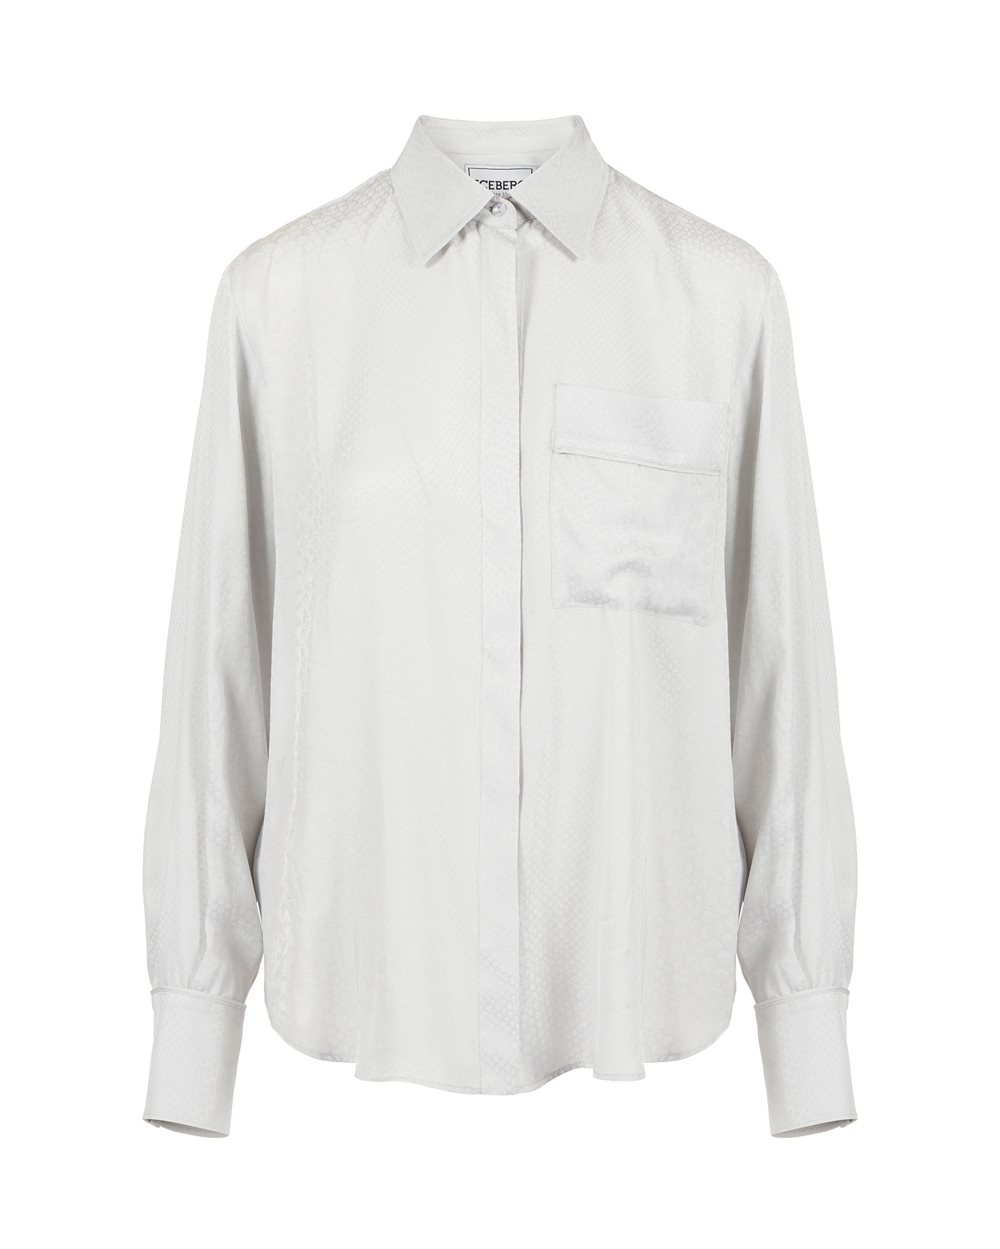 Viscose shirt with snake design - carosello preview donna | Iceberg - Official Website